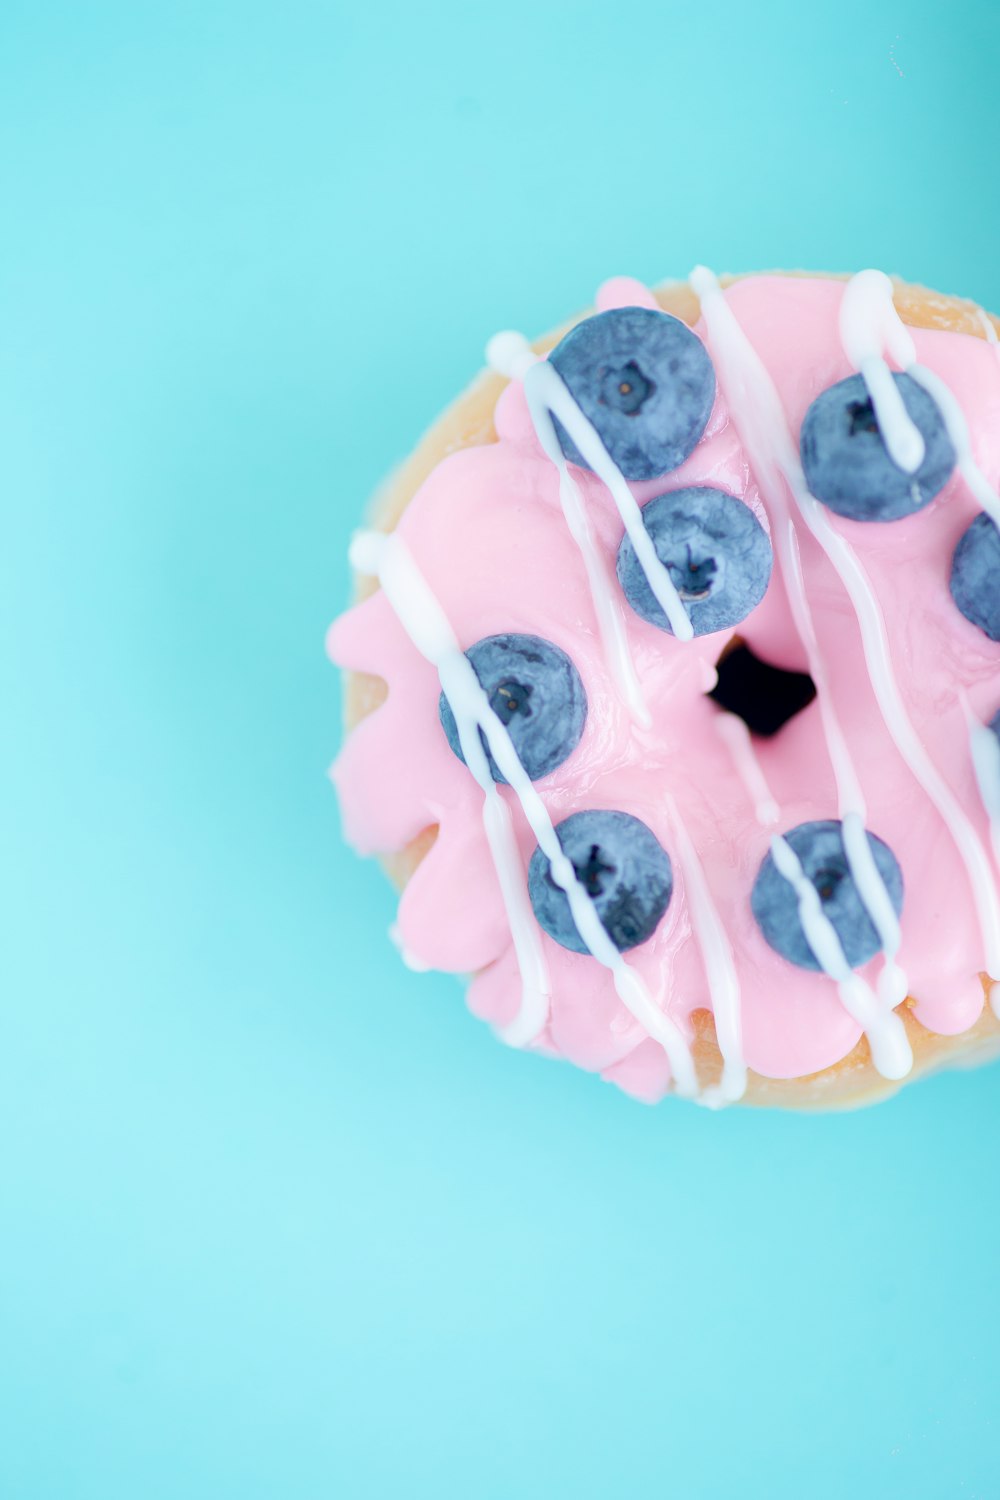 closeup photo of doughnut